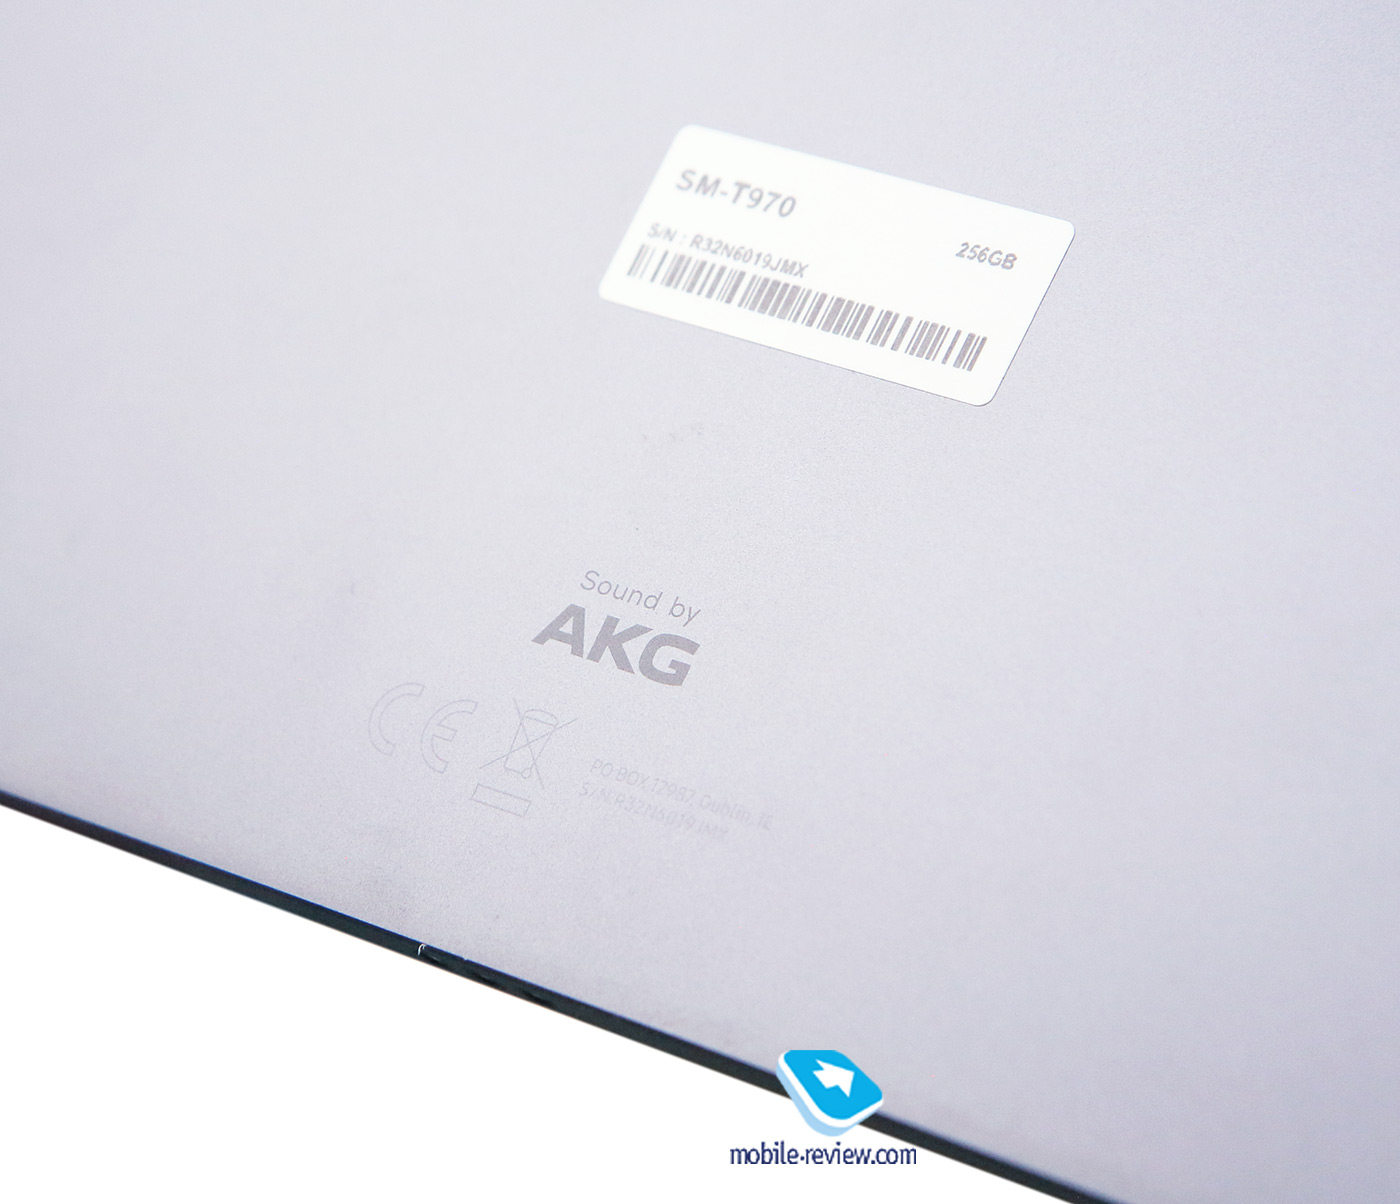    Samsung Galaxy Tab S7+ (SM-T970)